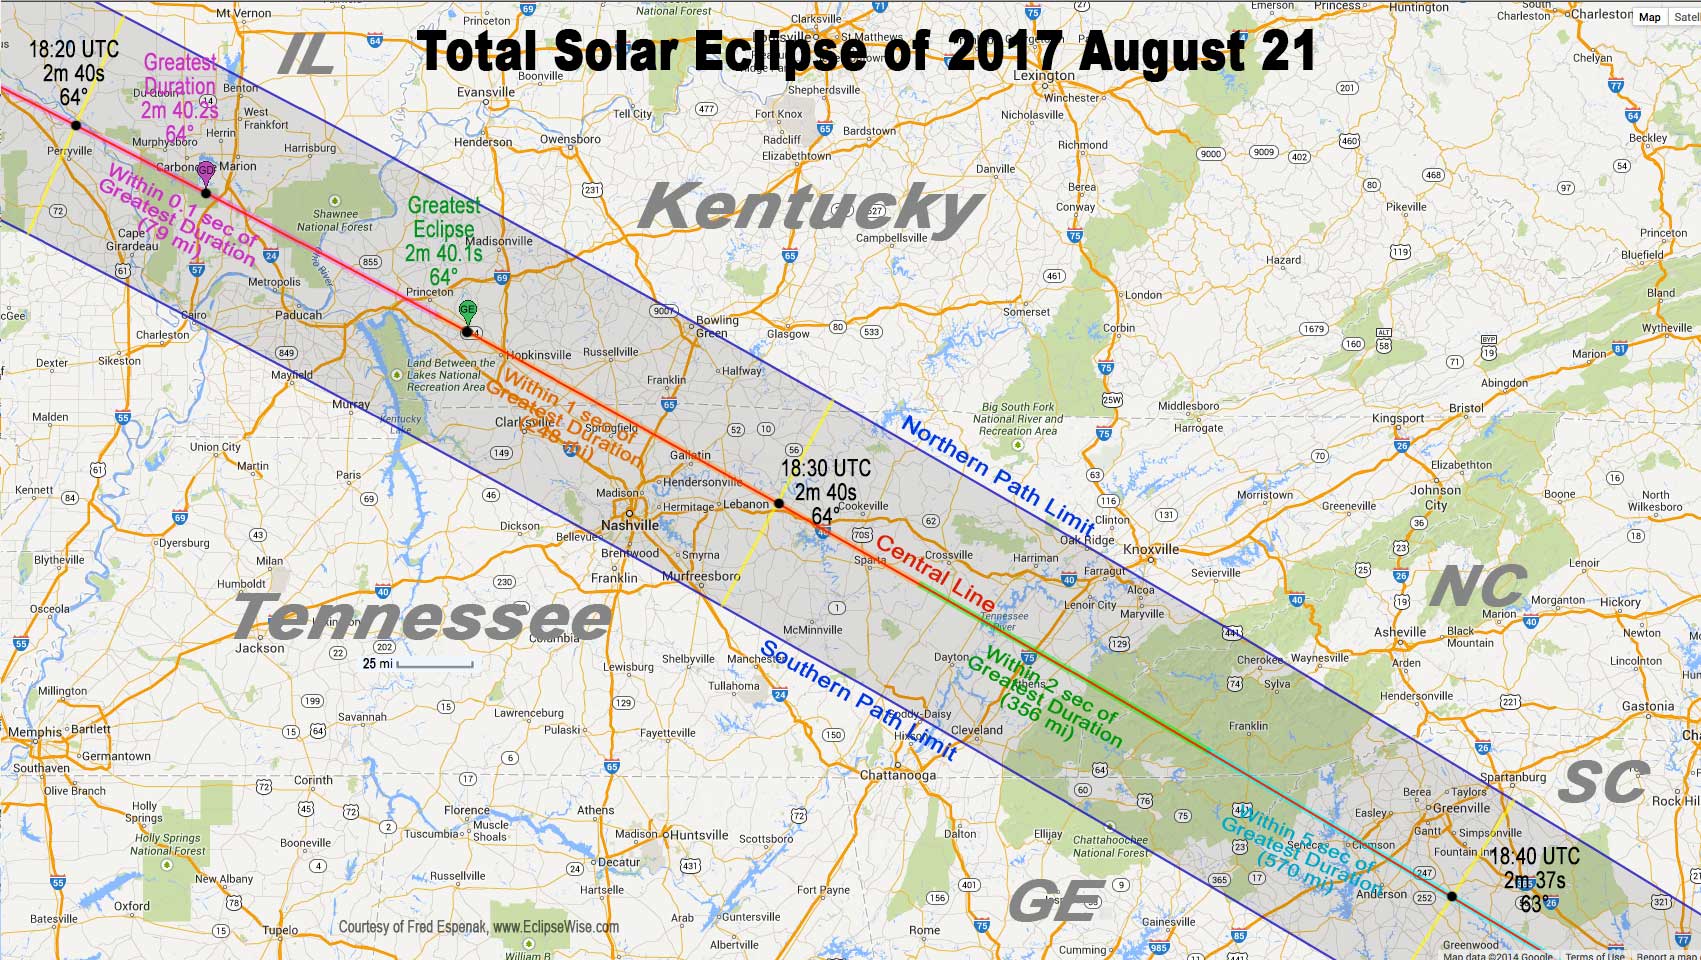 Solar Eclipse Chart 2017